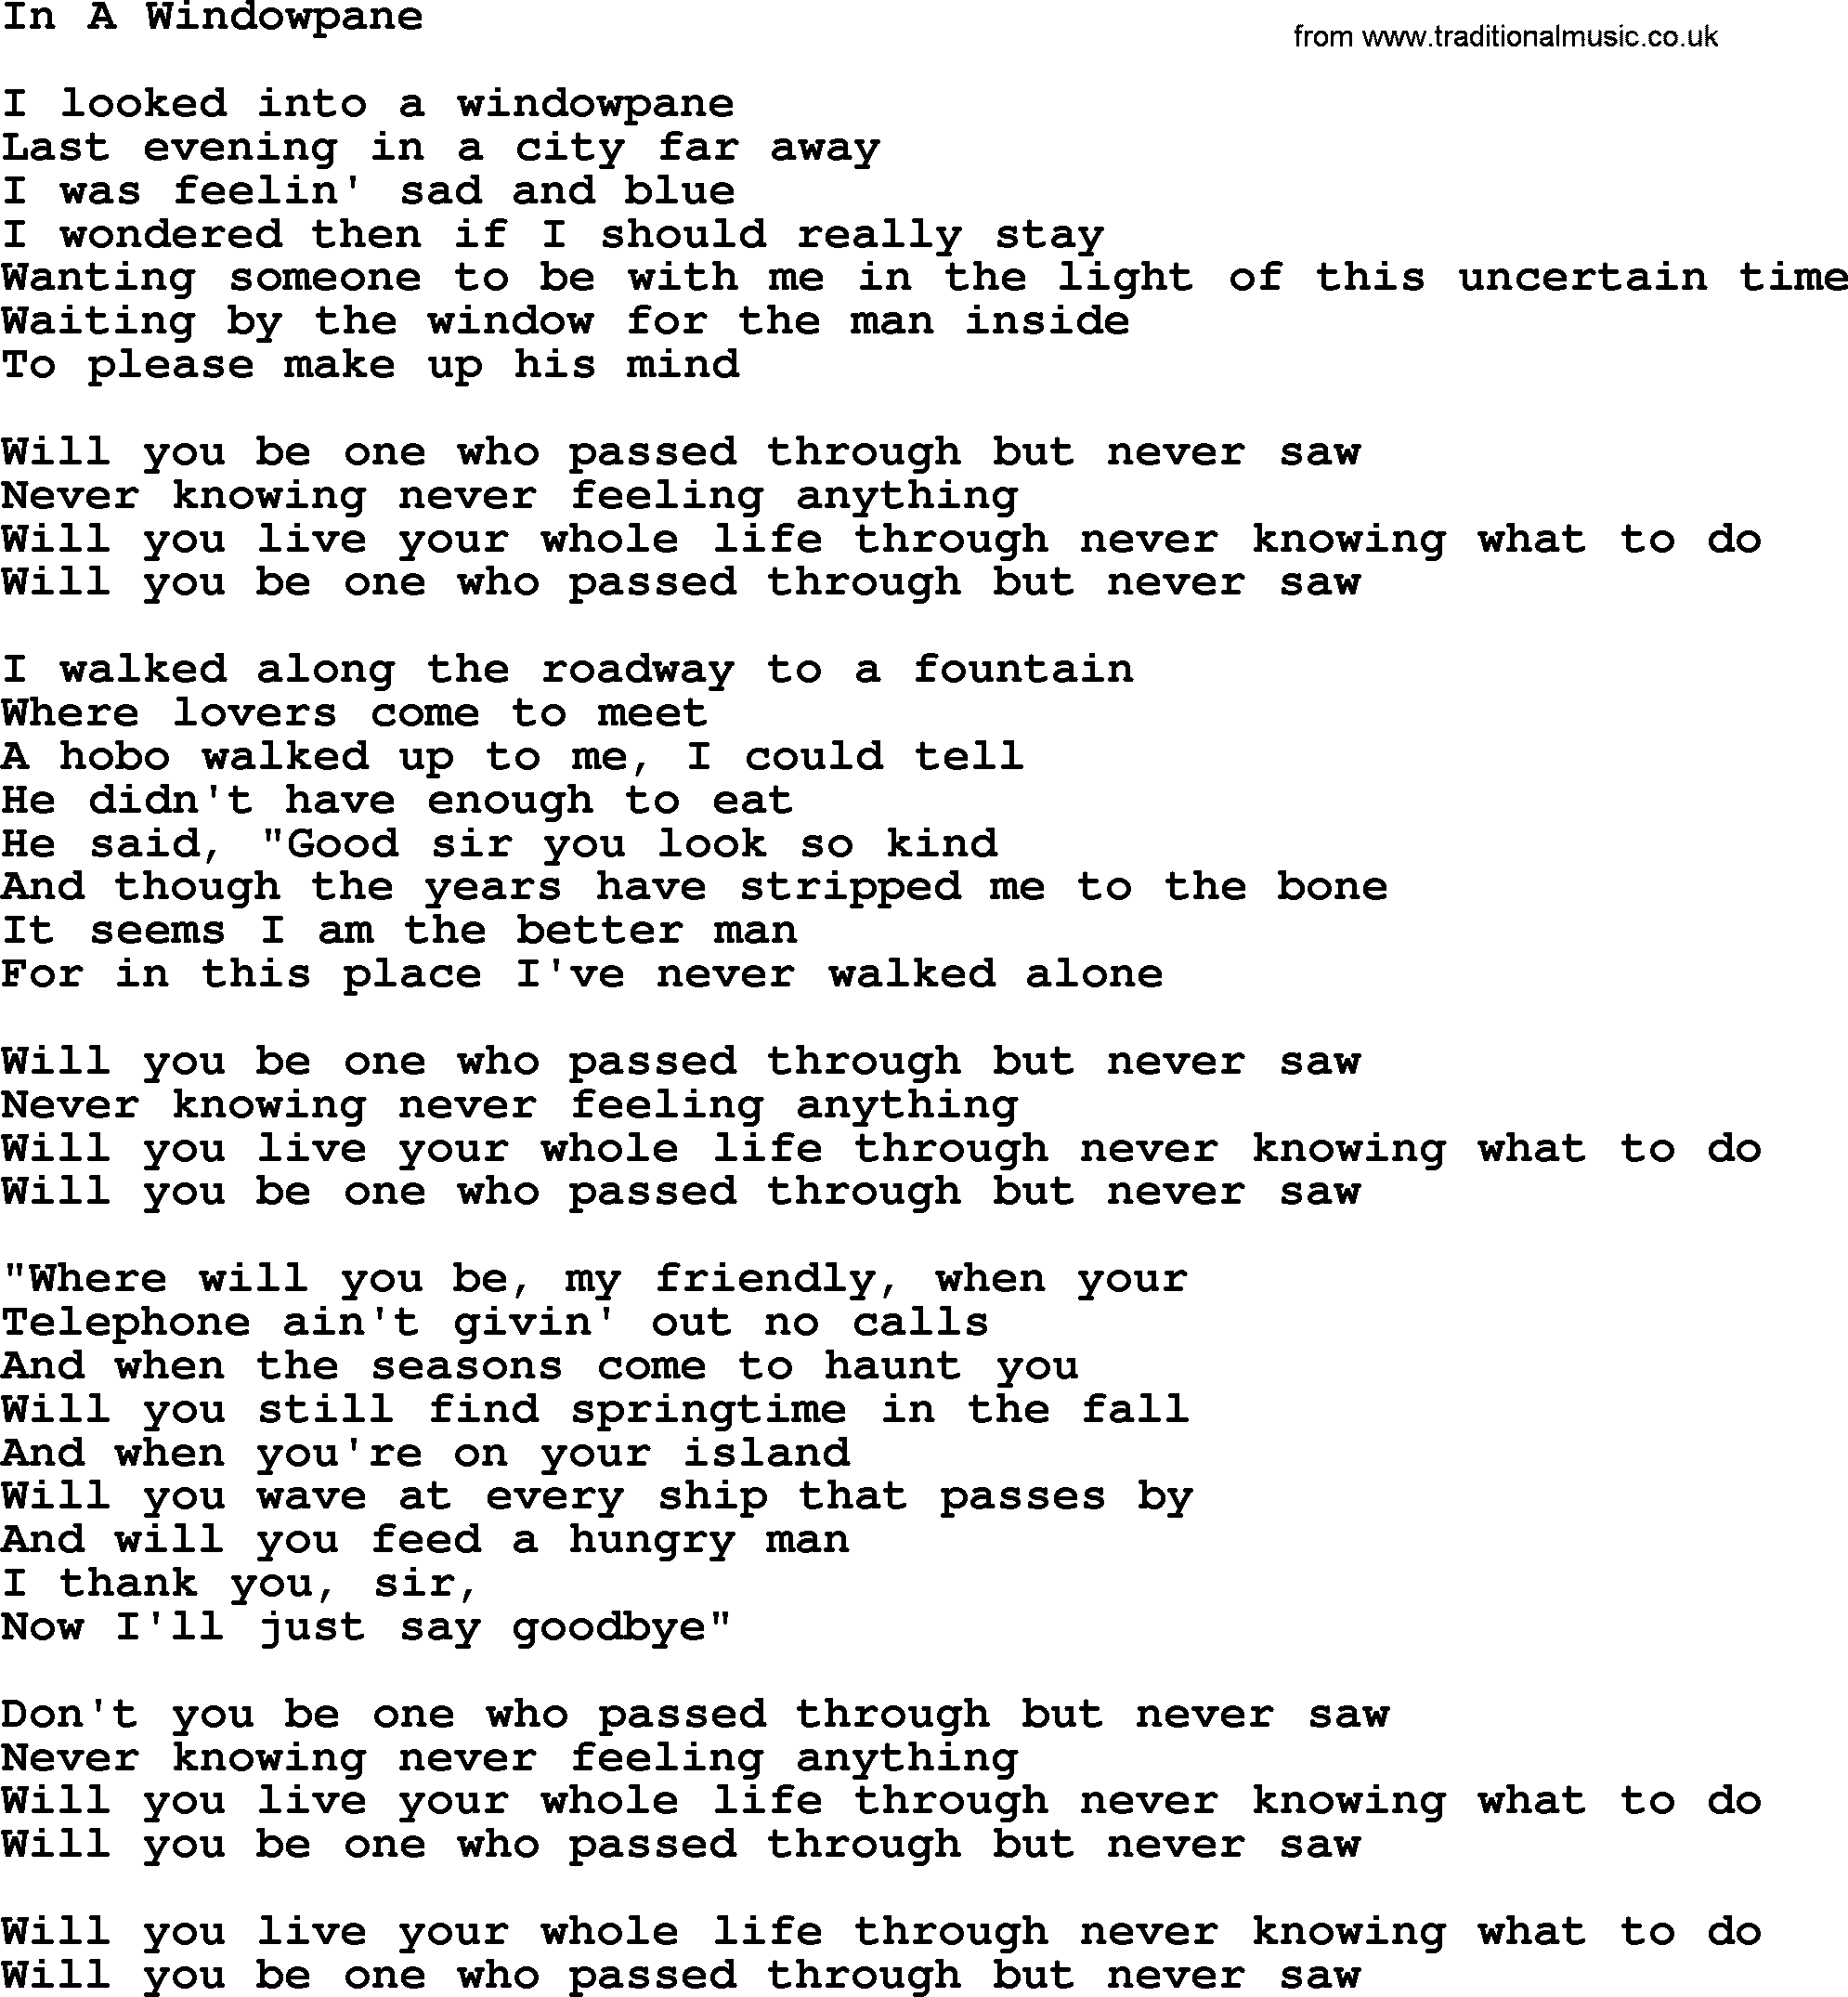 Gordon Lightfoot song In A Windowpane, lyrics